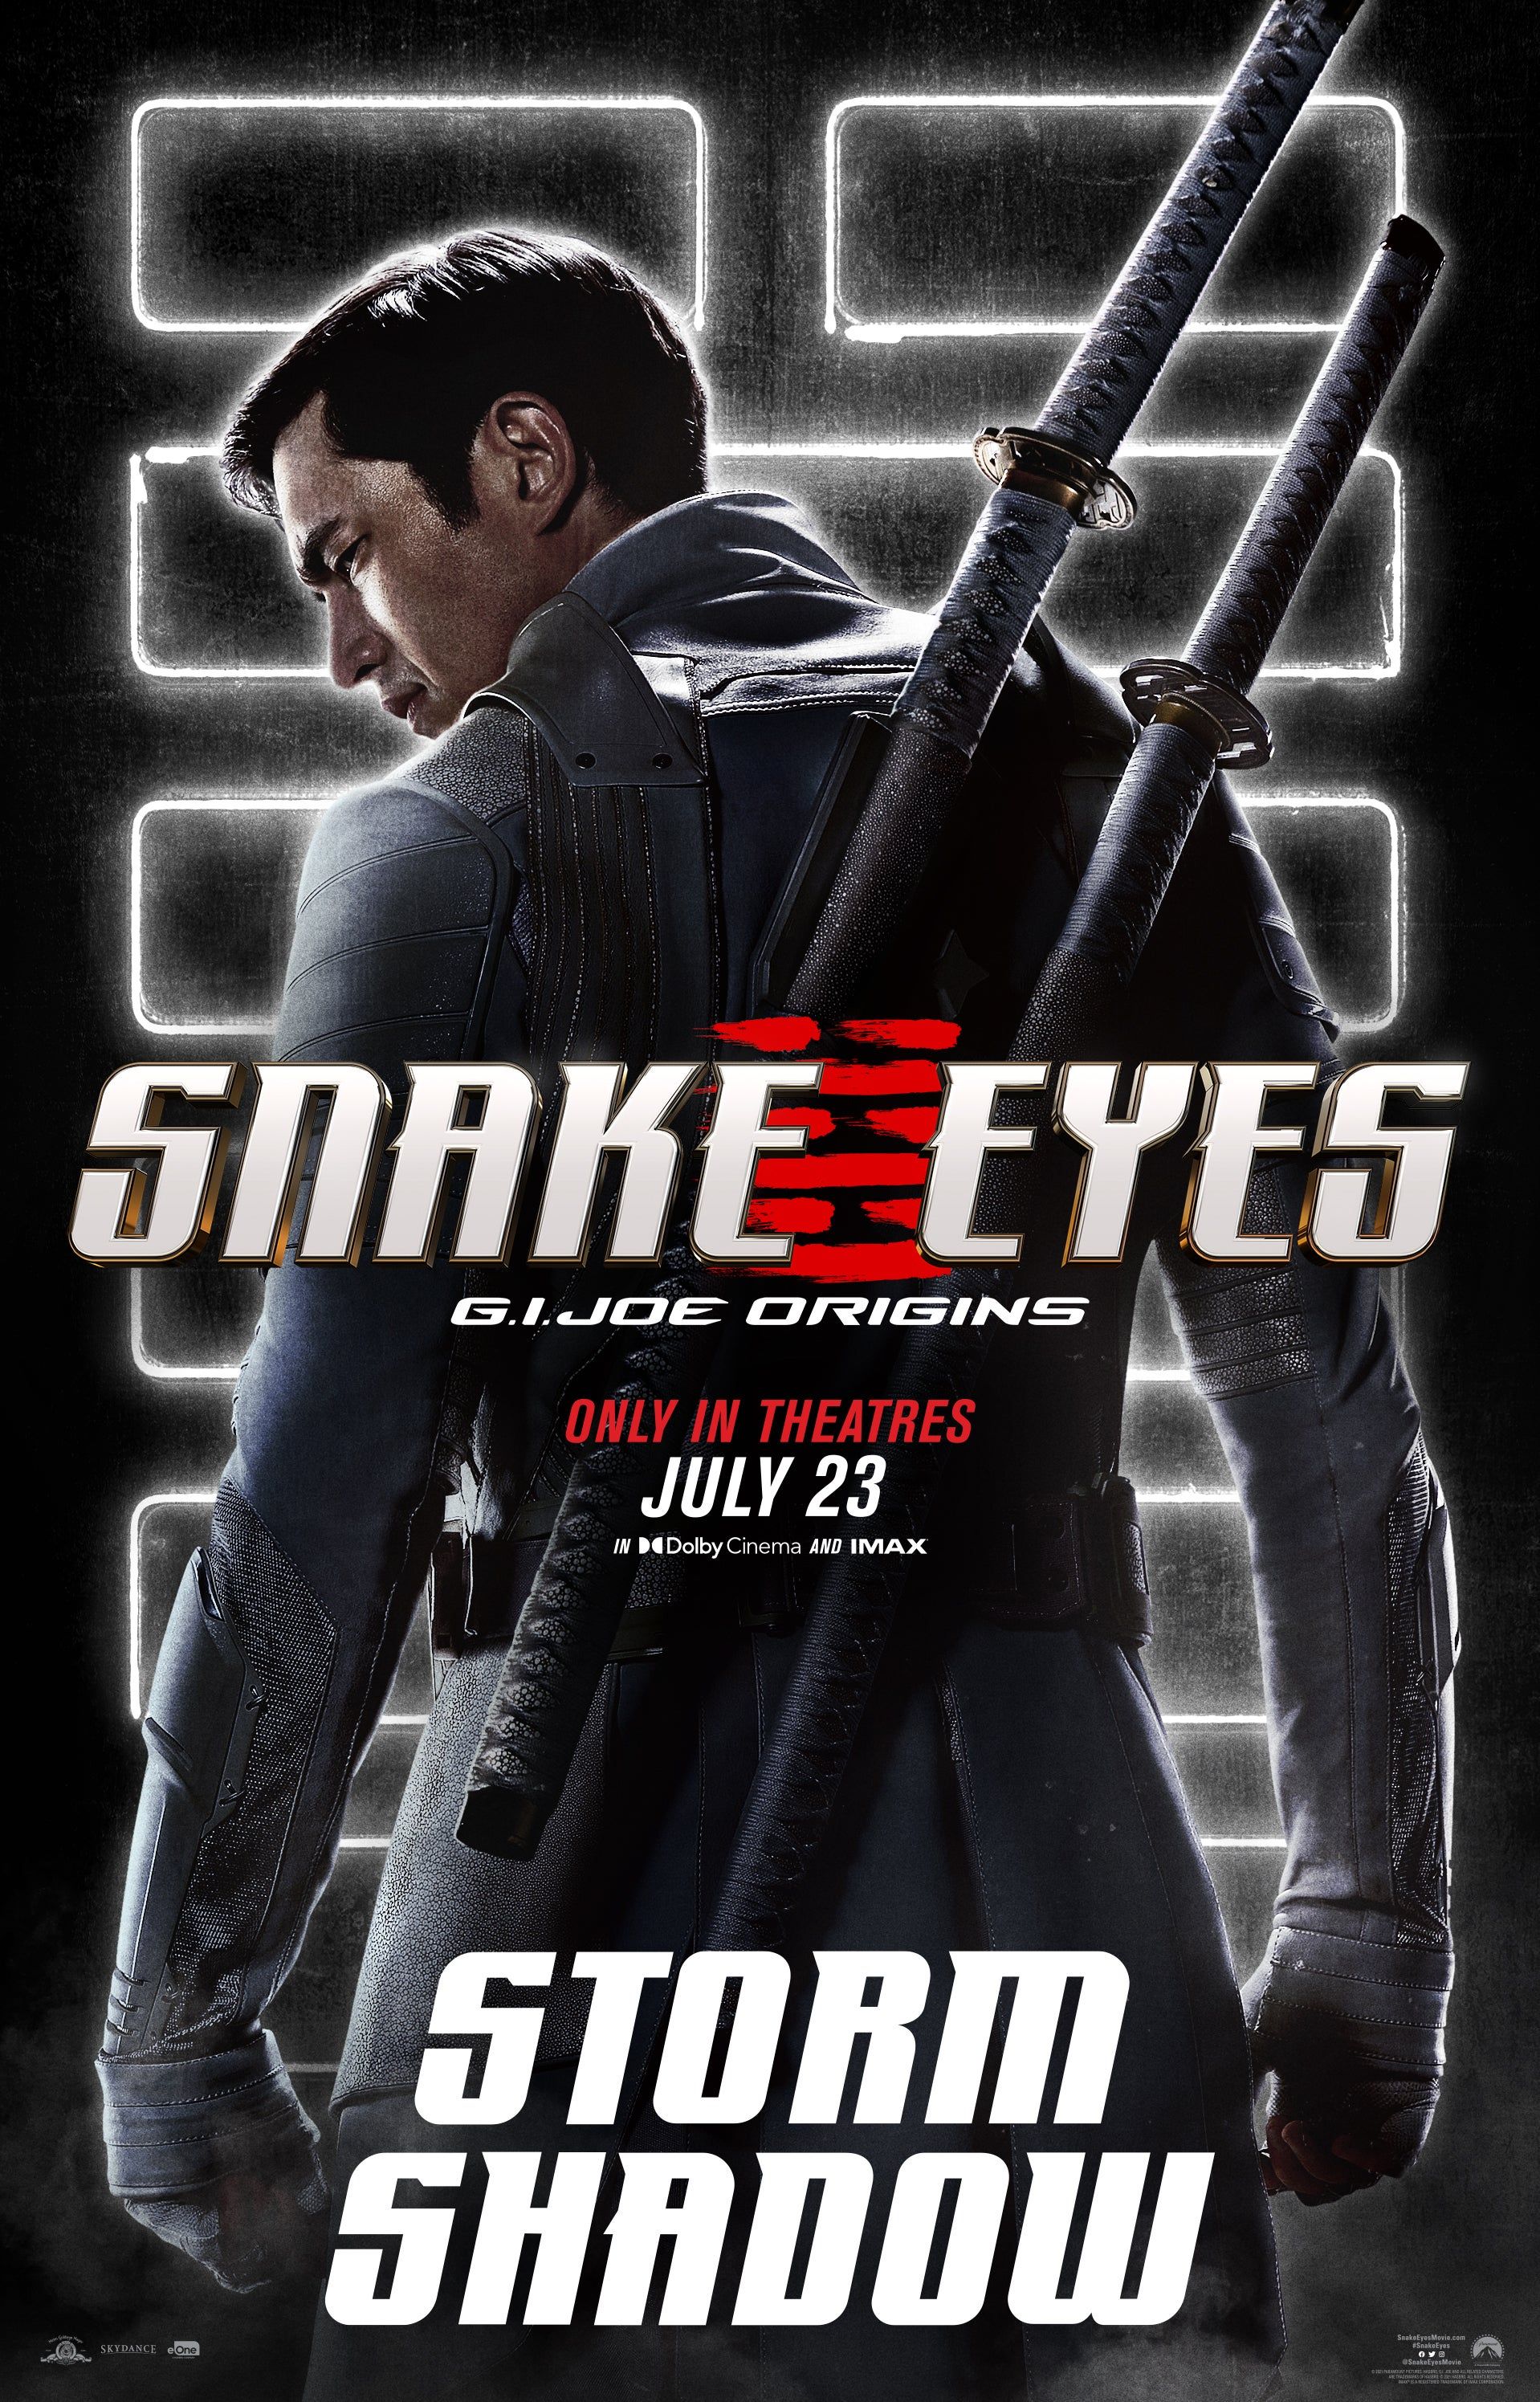 Snake Eyes: G.I. Joe Origins New Character Posters Revealed